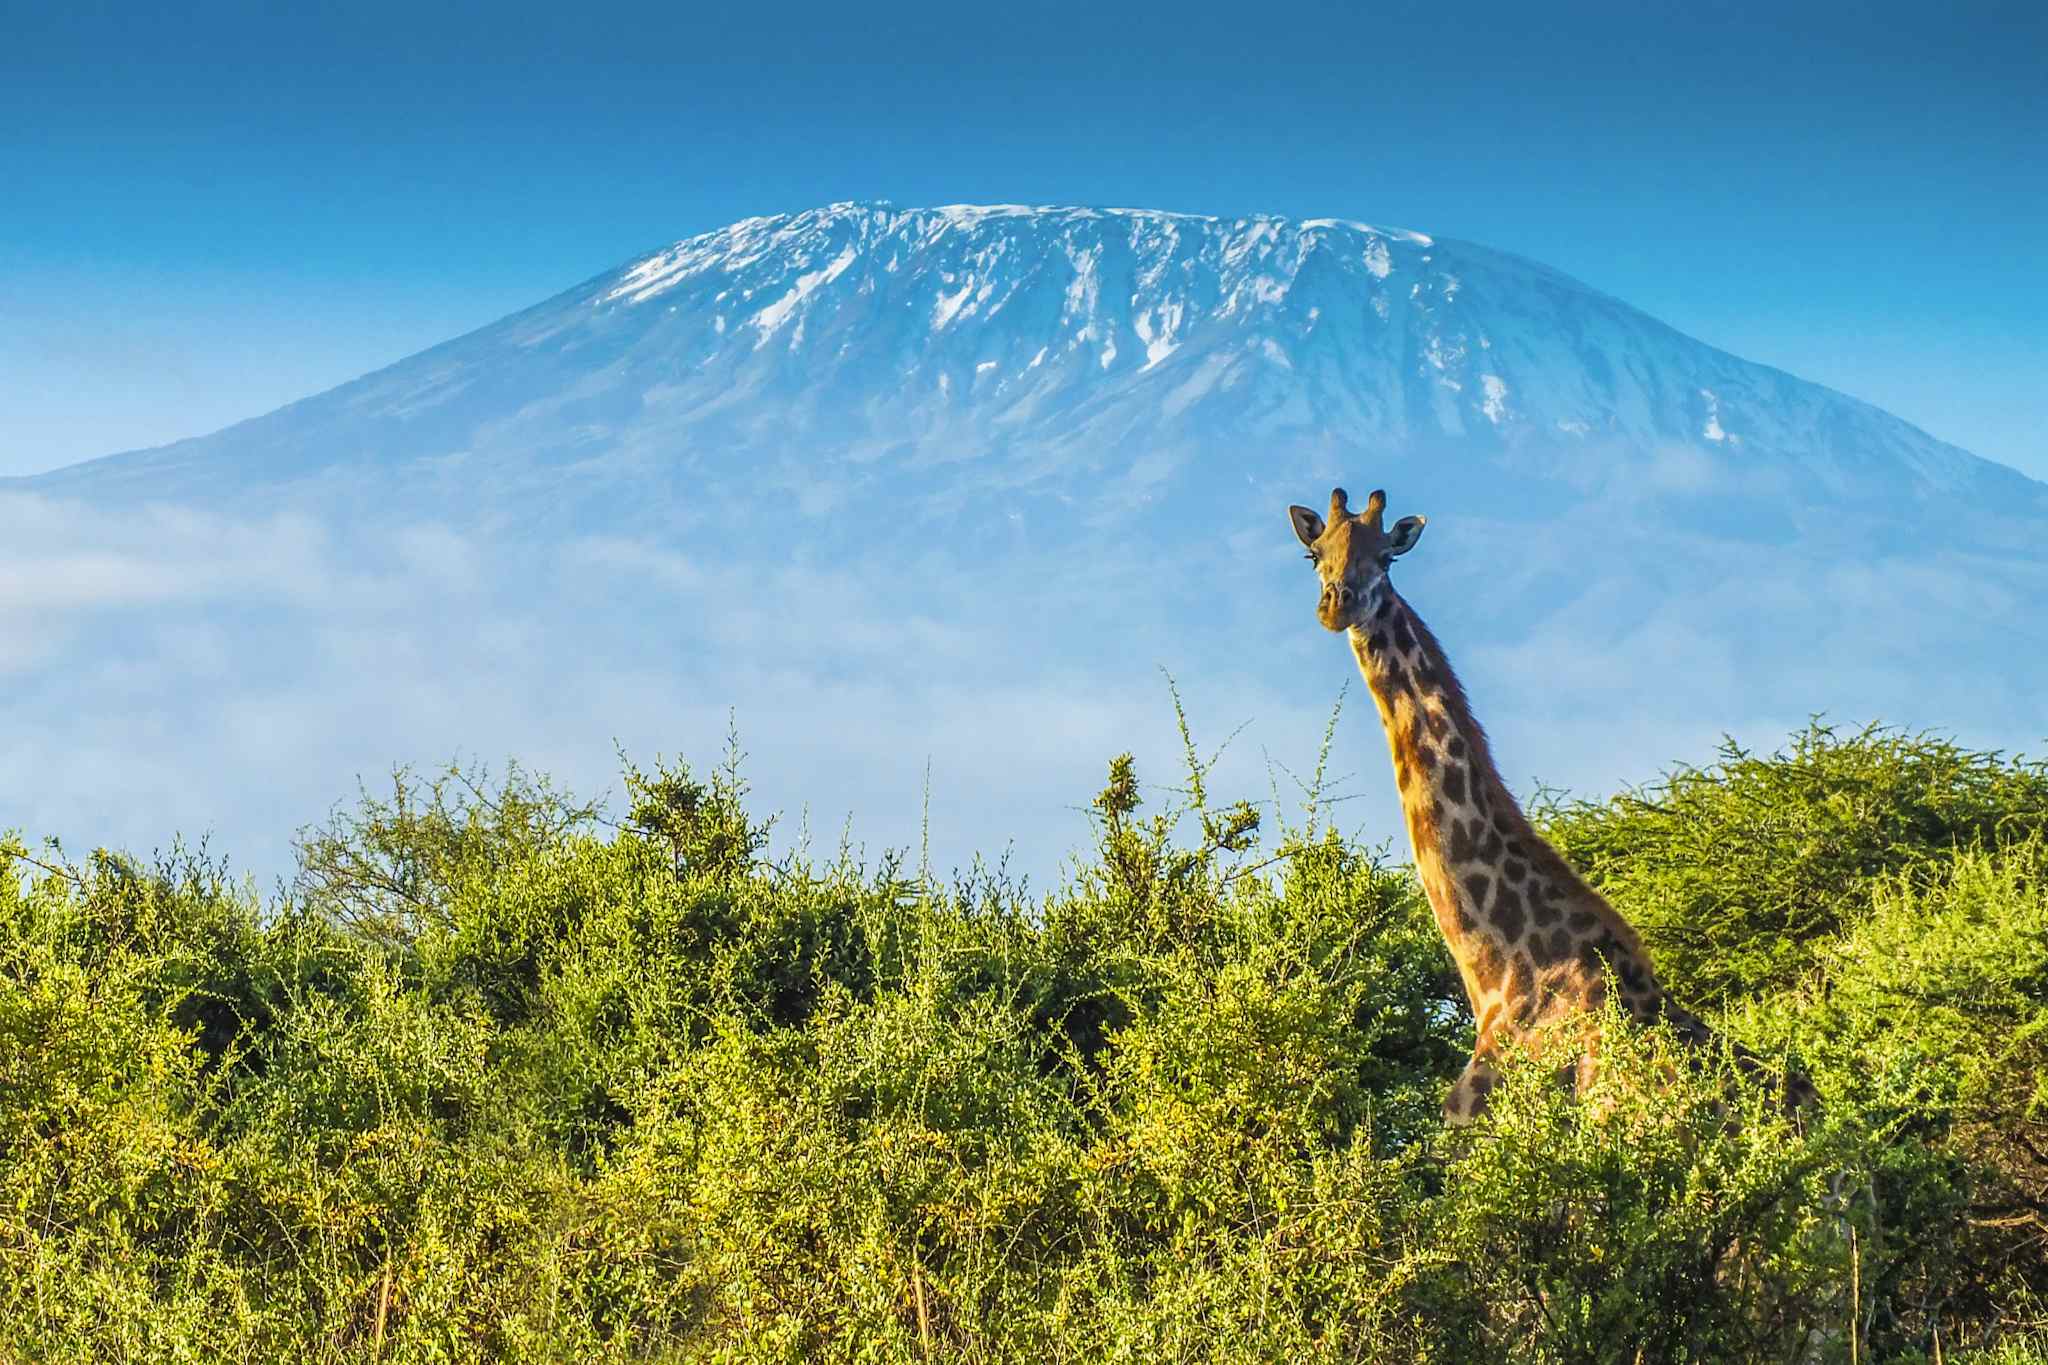 Giraffe in the African bush, with Mount Kilimanjaro in the background, Tanzania.
